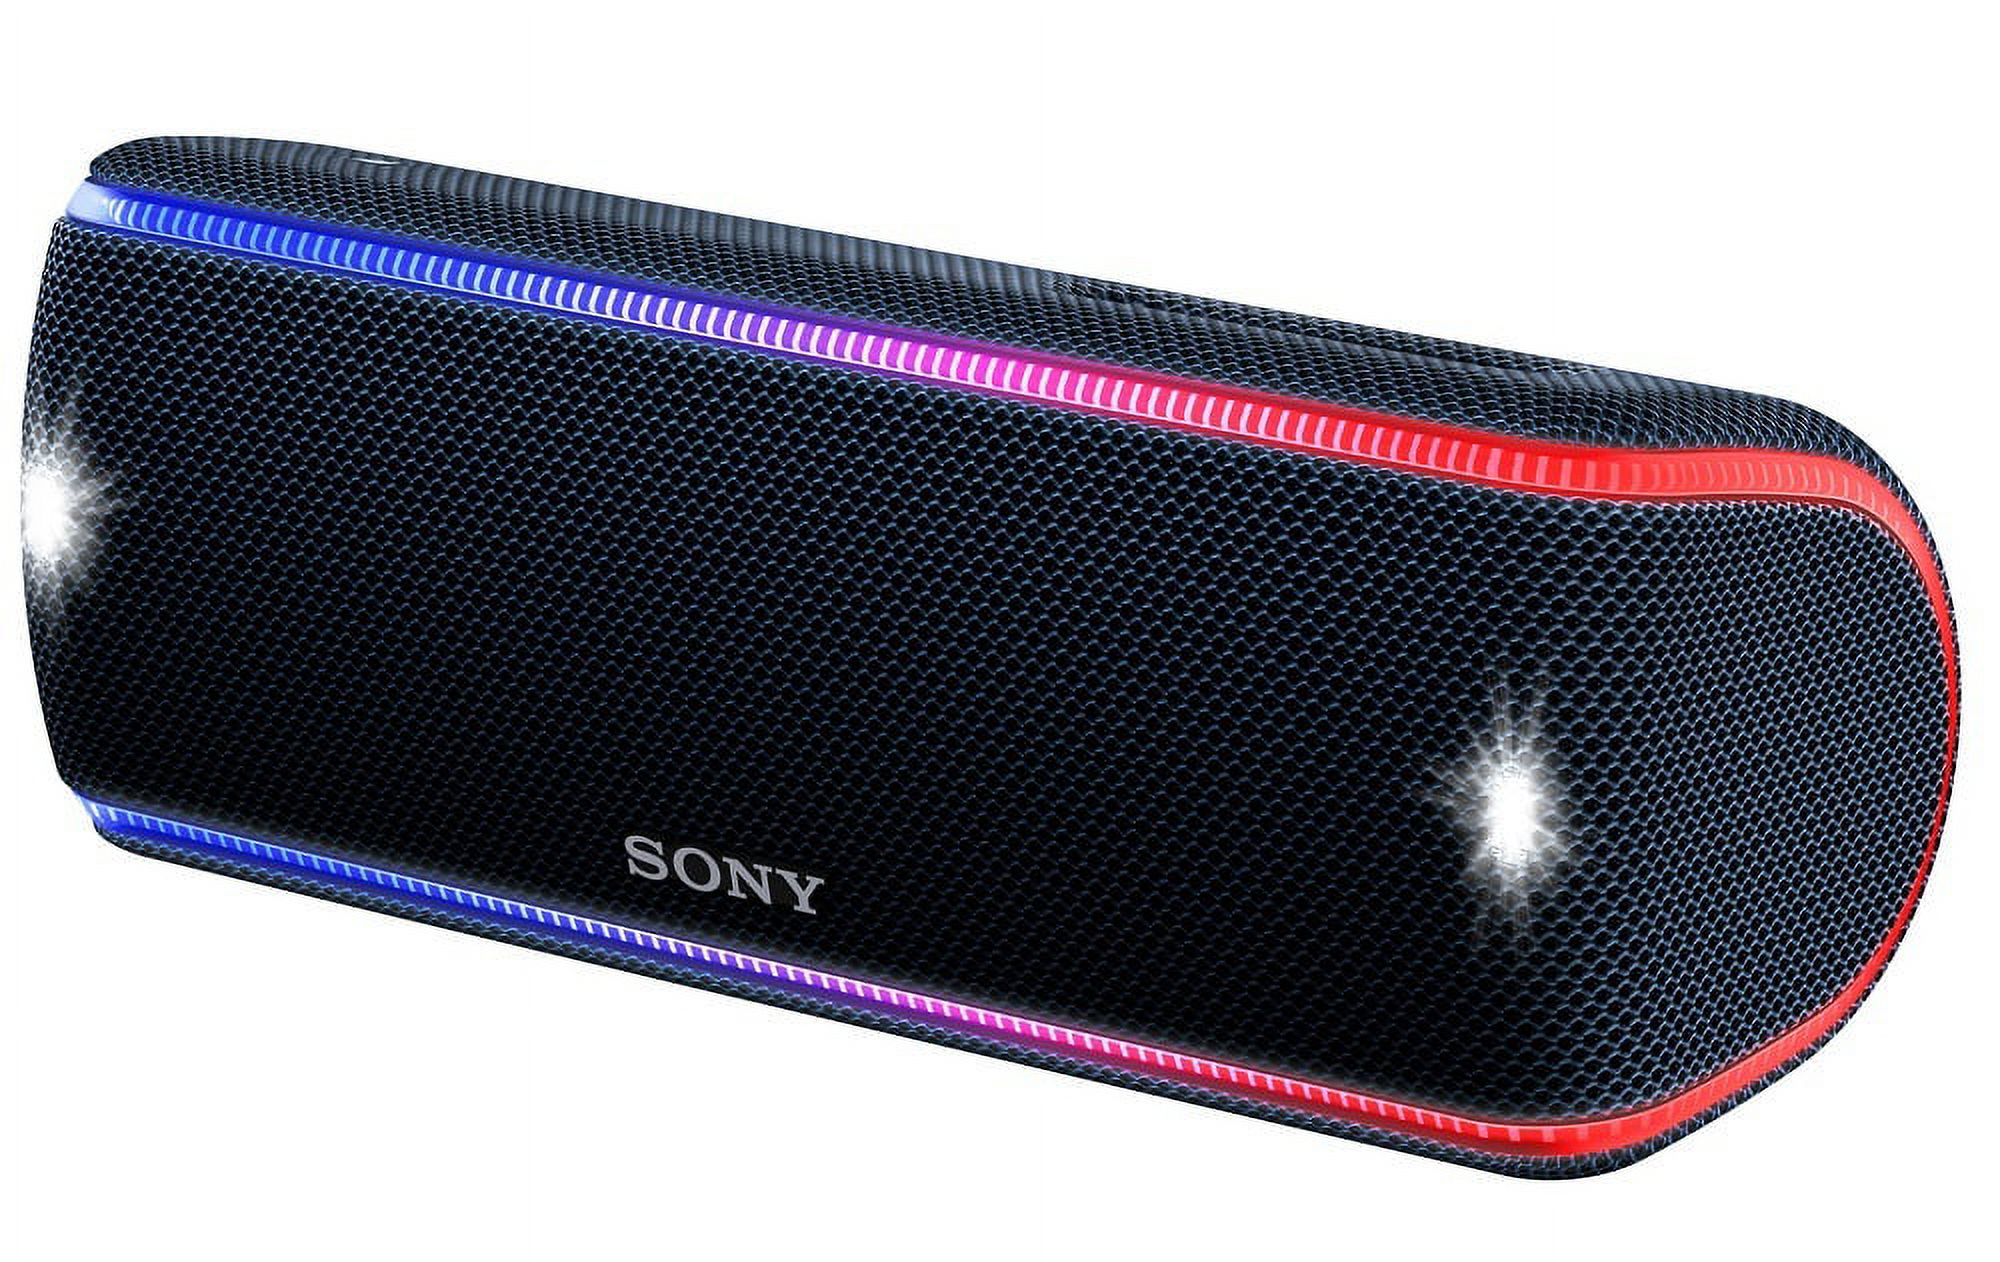 SONY SRS-XB31/B Black Portable Wireless Speaker - image 5 of 7